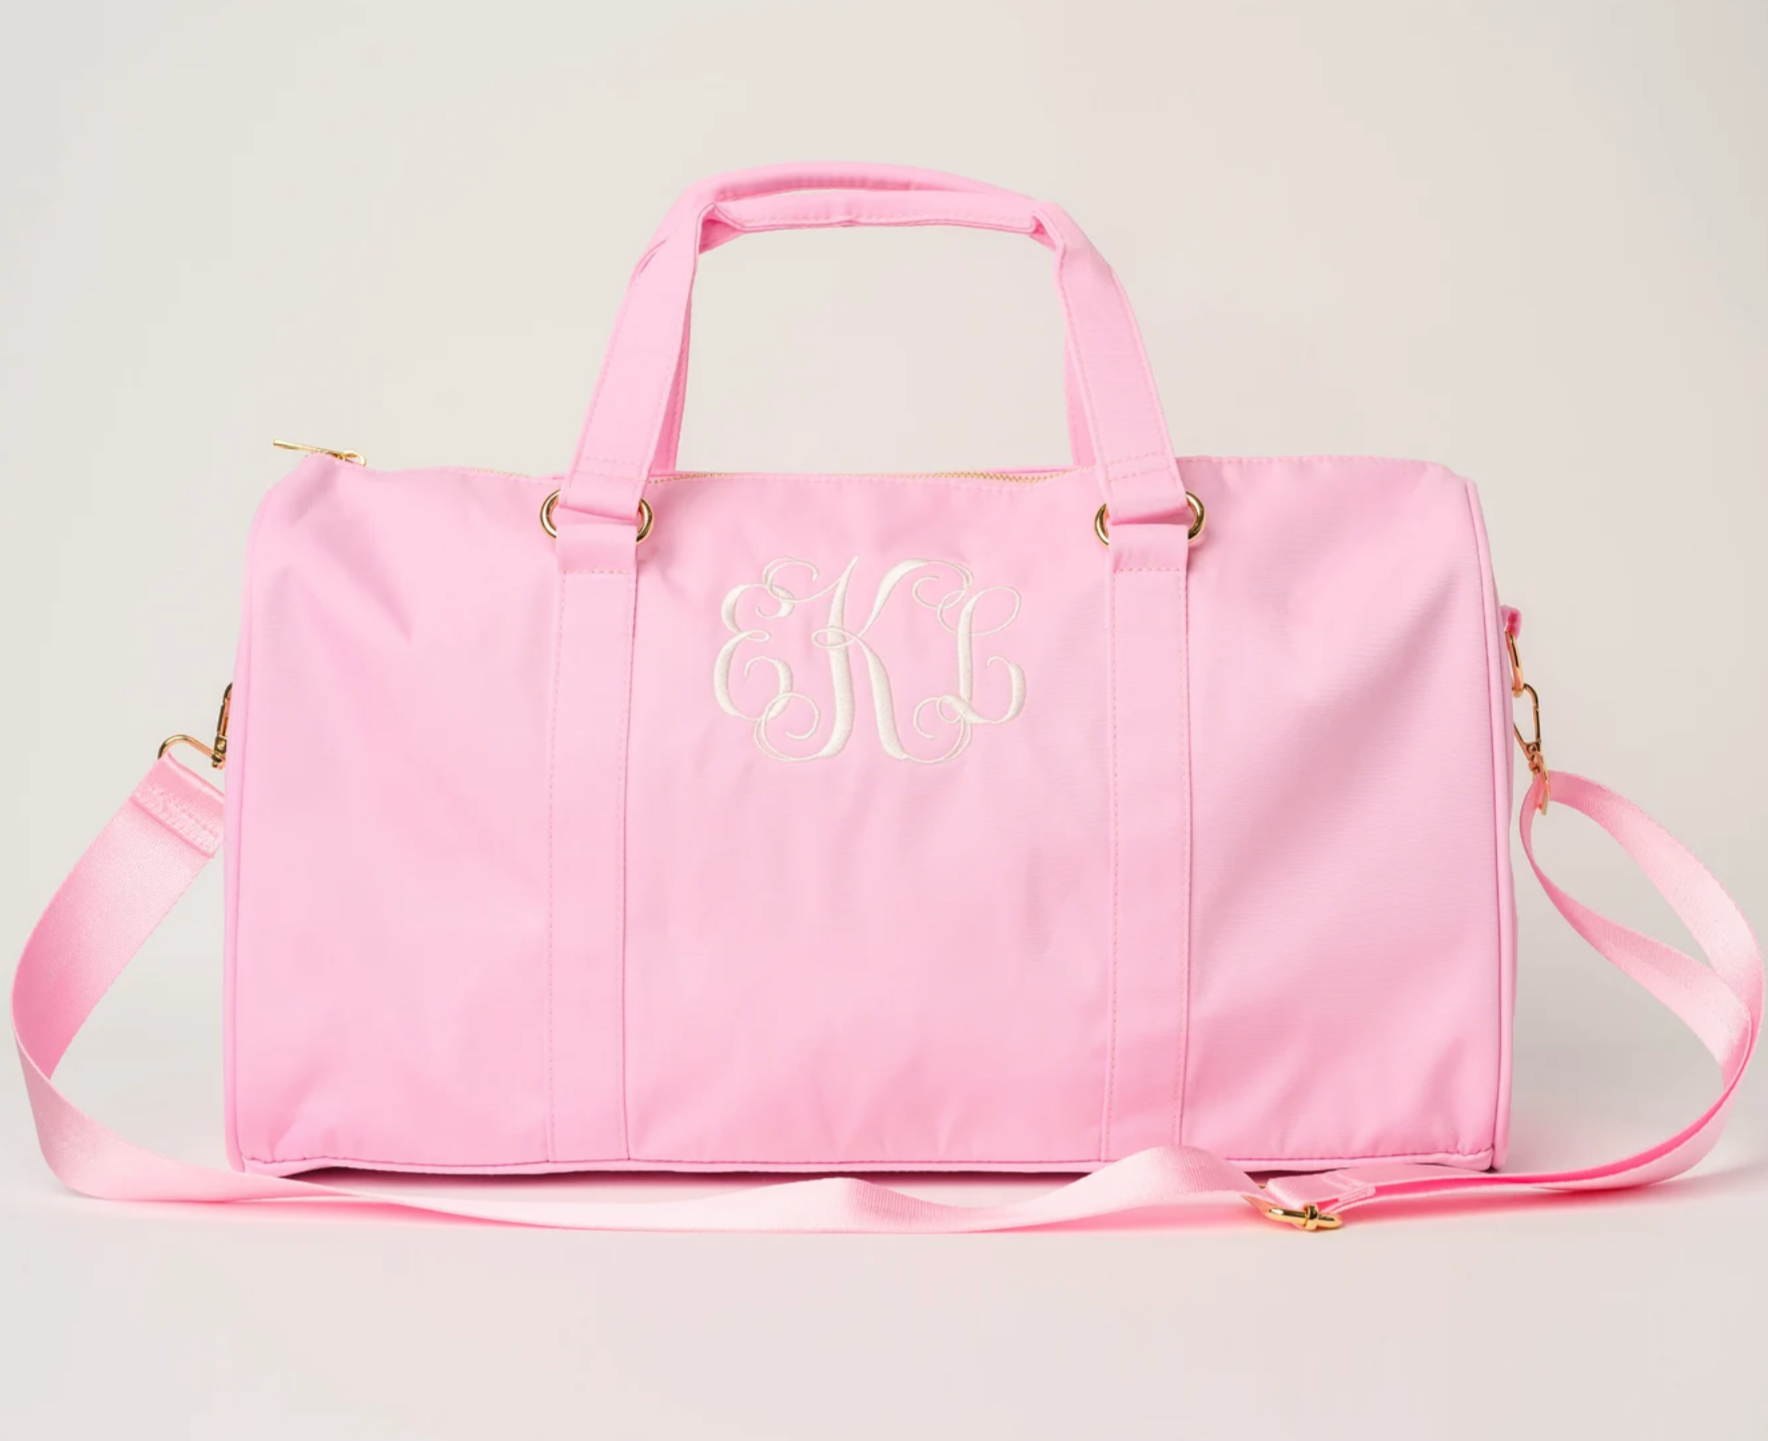 Personalised Bag / Duffle Bag / Baby Bag / Monogrammed 